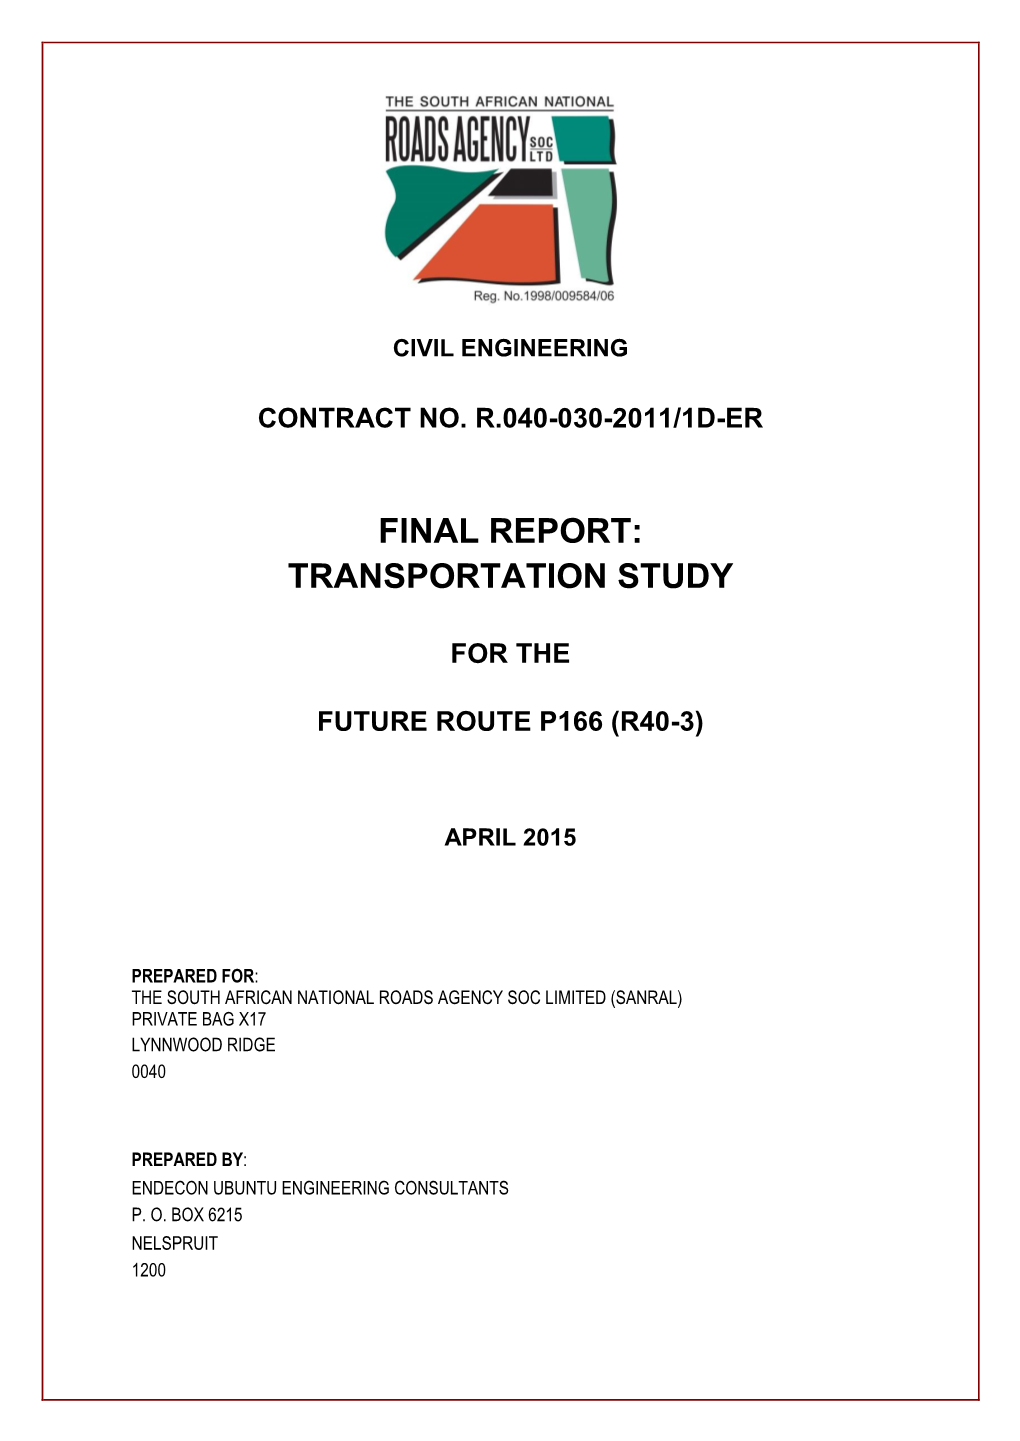 Final Report: Transportation Study